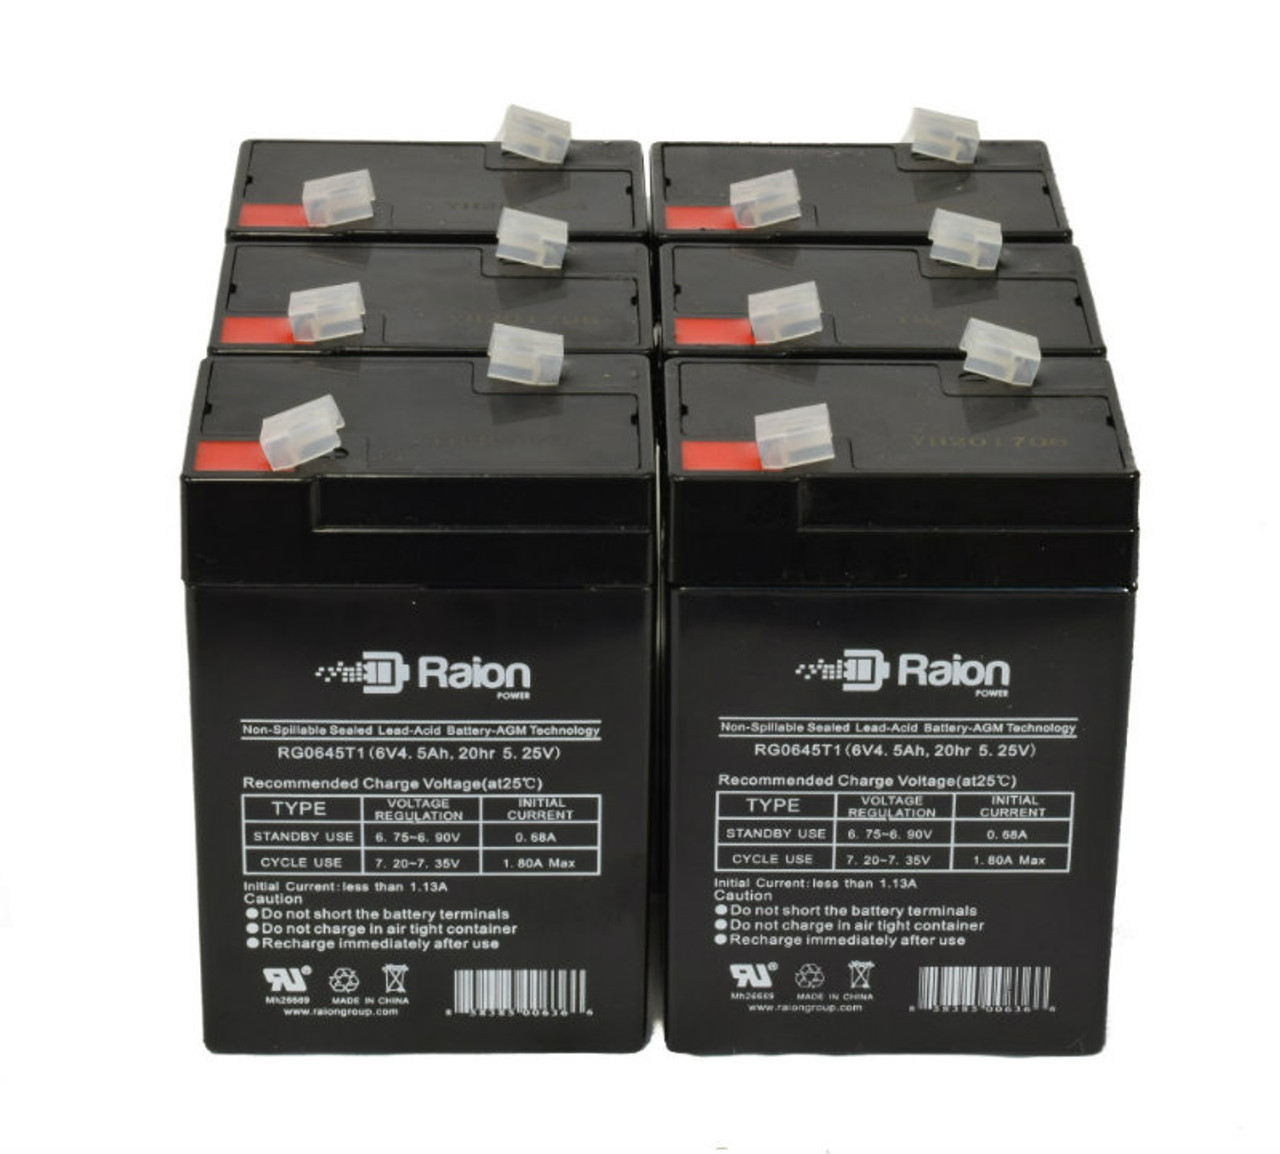 Raion Power 6 Volt 4.5Ah RG0645T1 Replacement Battery for Zeus PC4.5-6S - 6 Pack